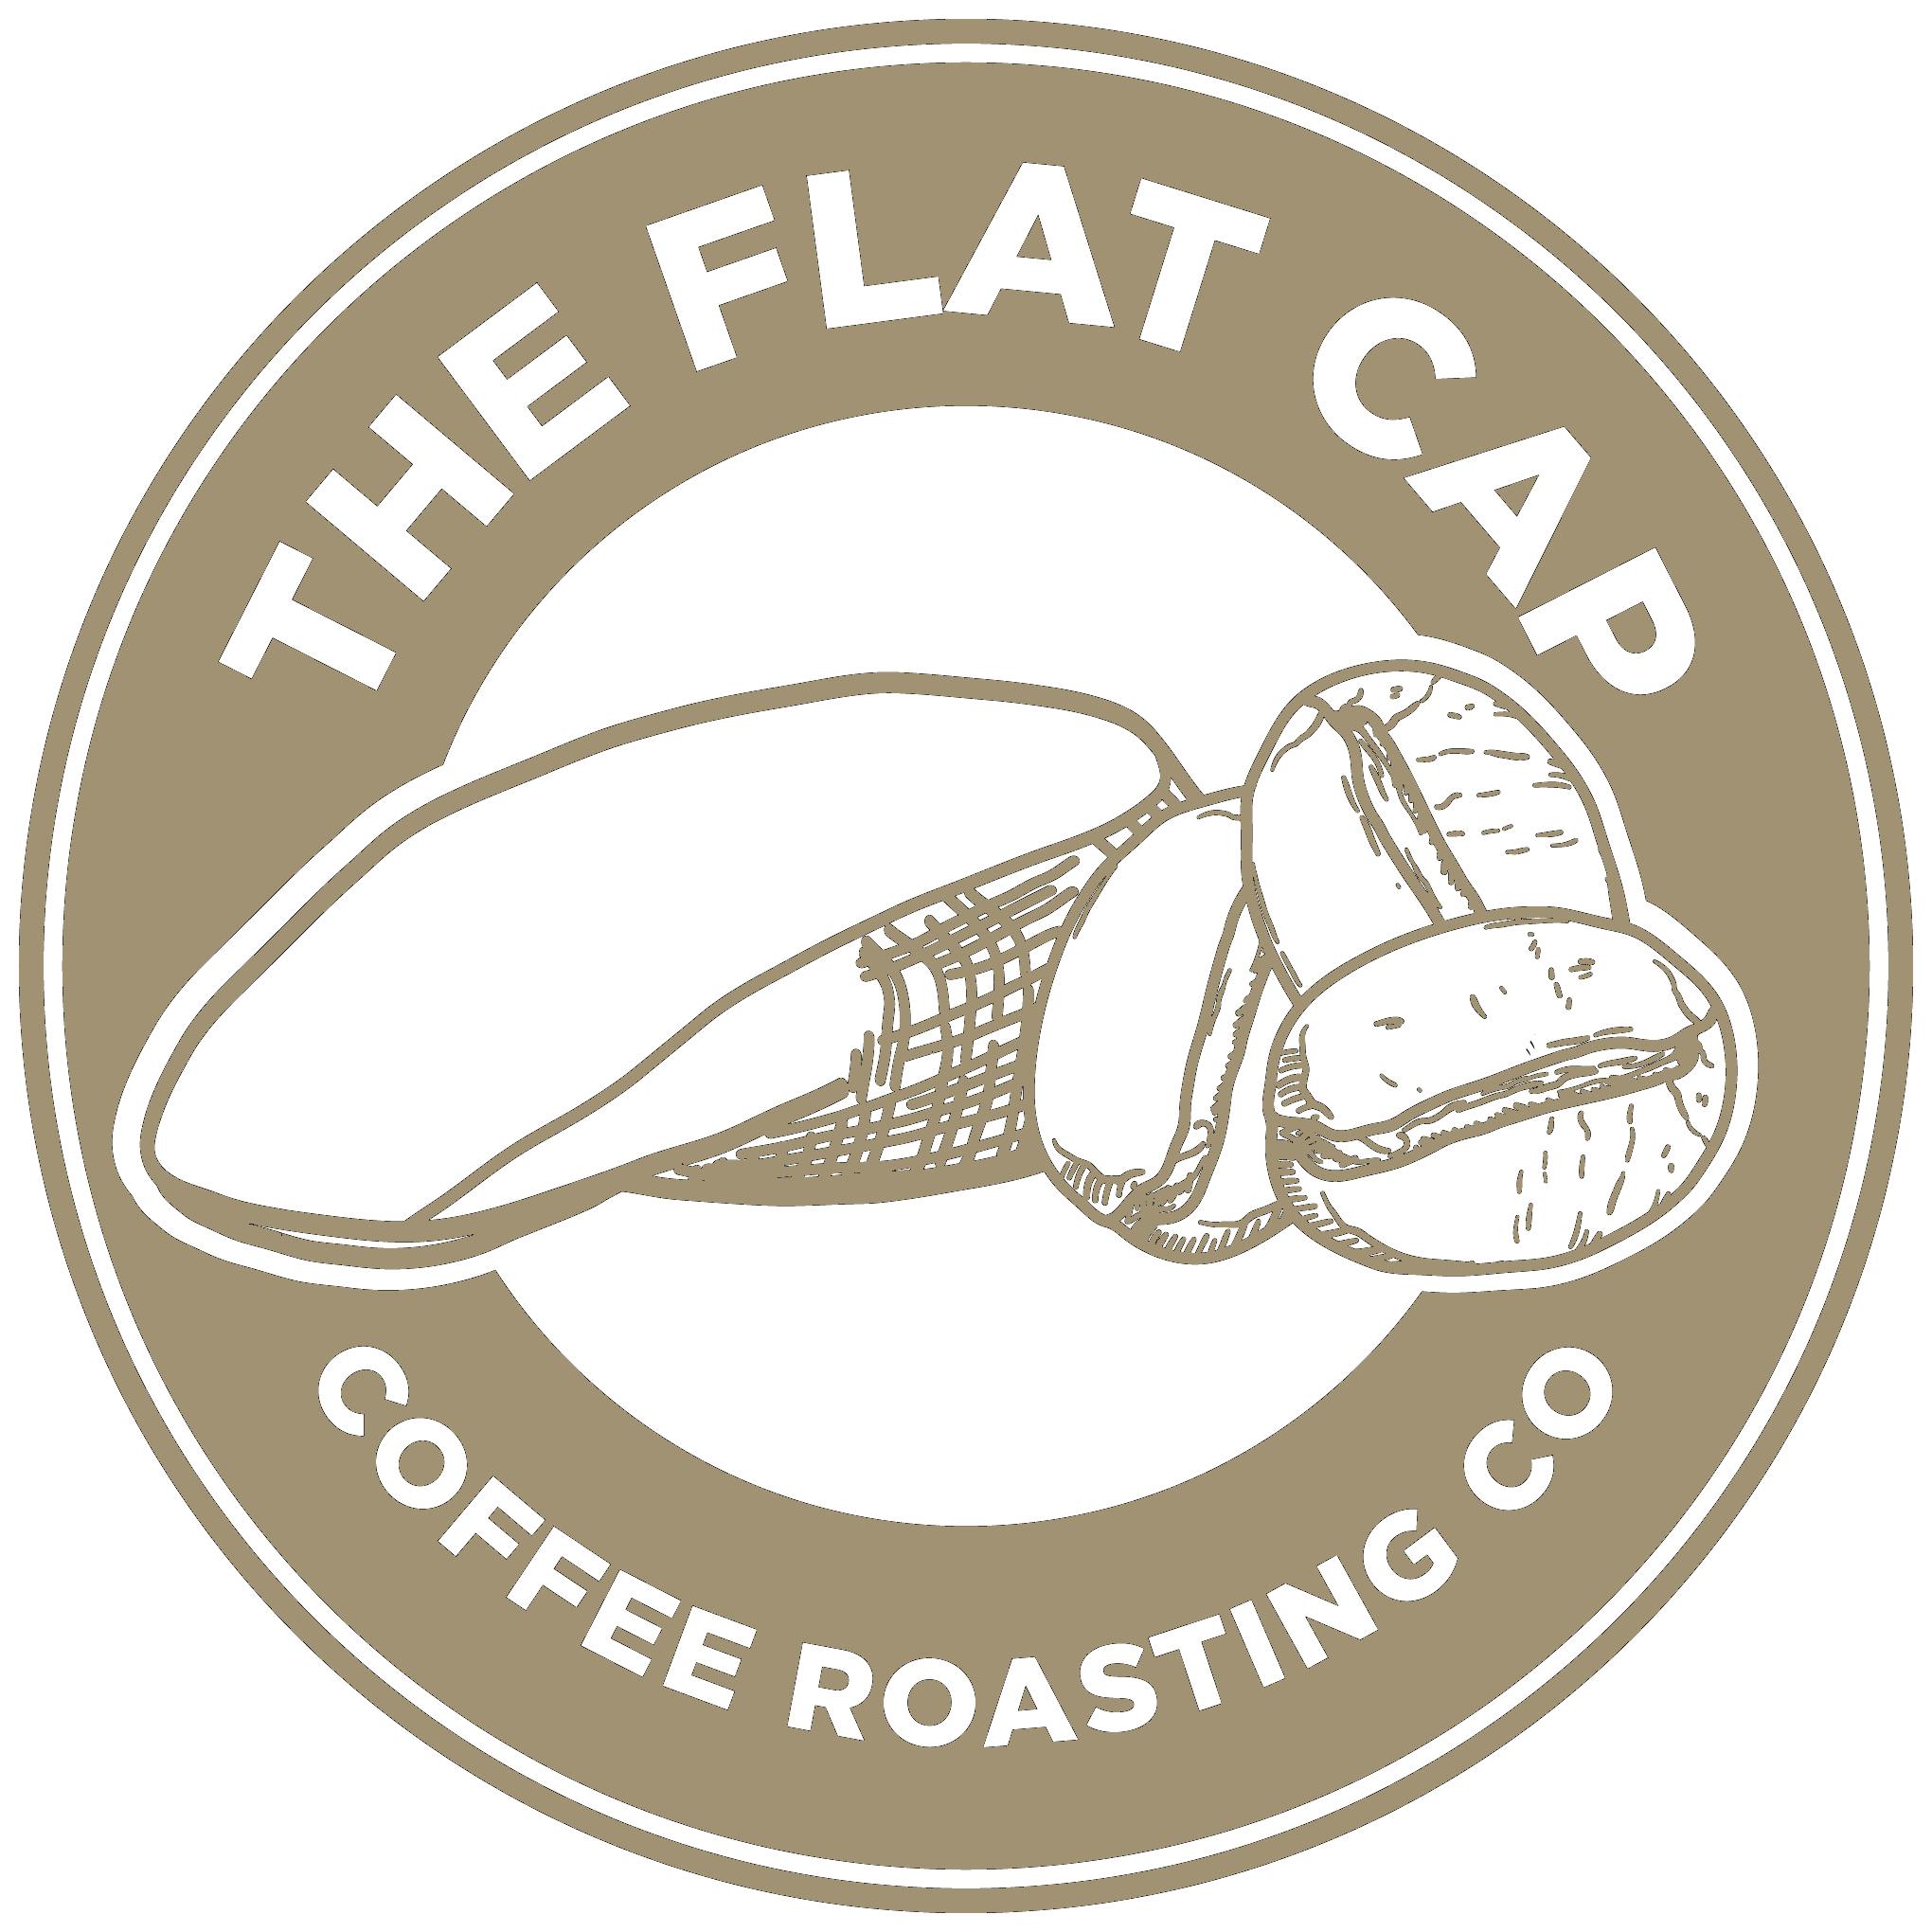 The Flat Cap Coffee Roasting company logo